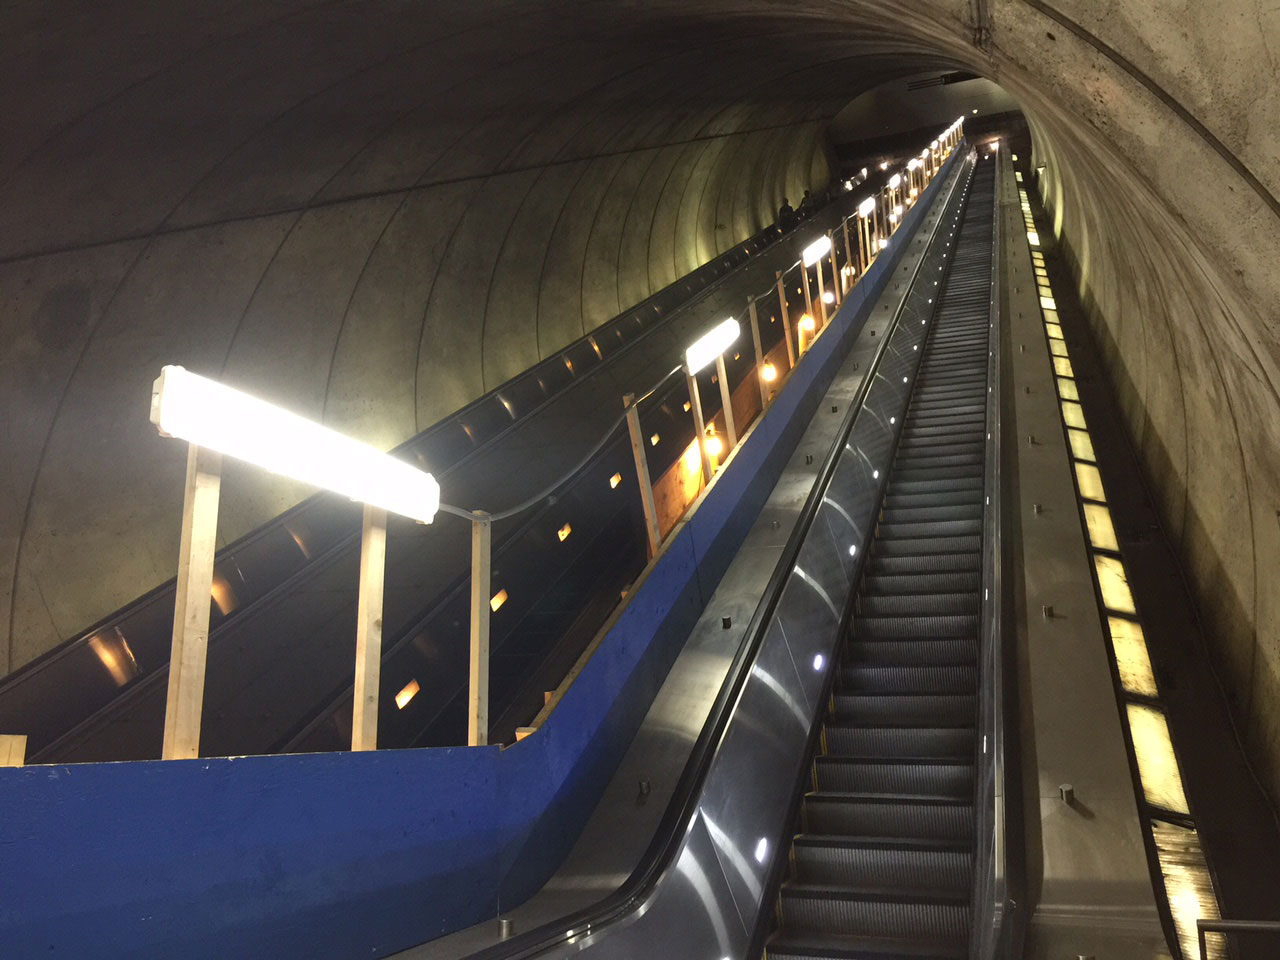 New escalator makes debut at Metro’s Bethesda station